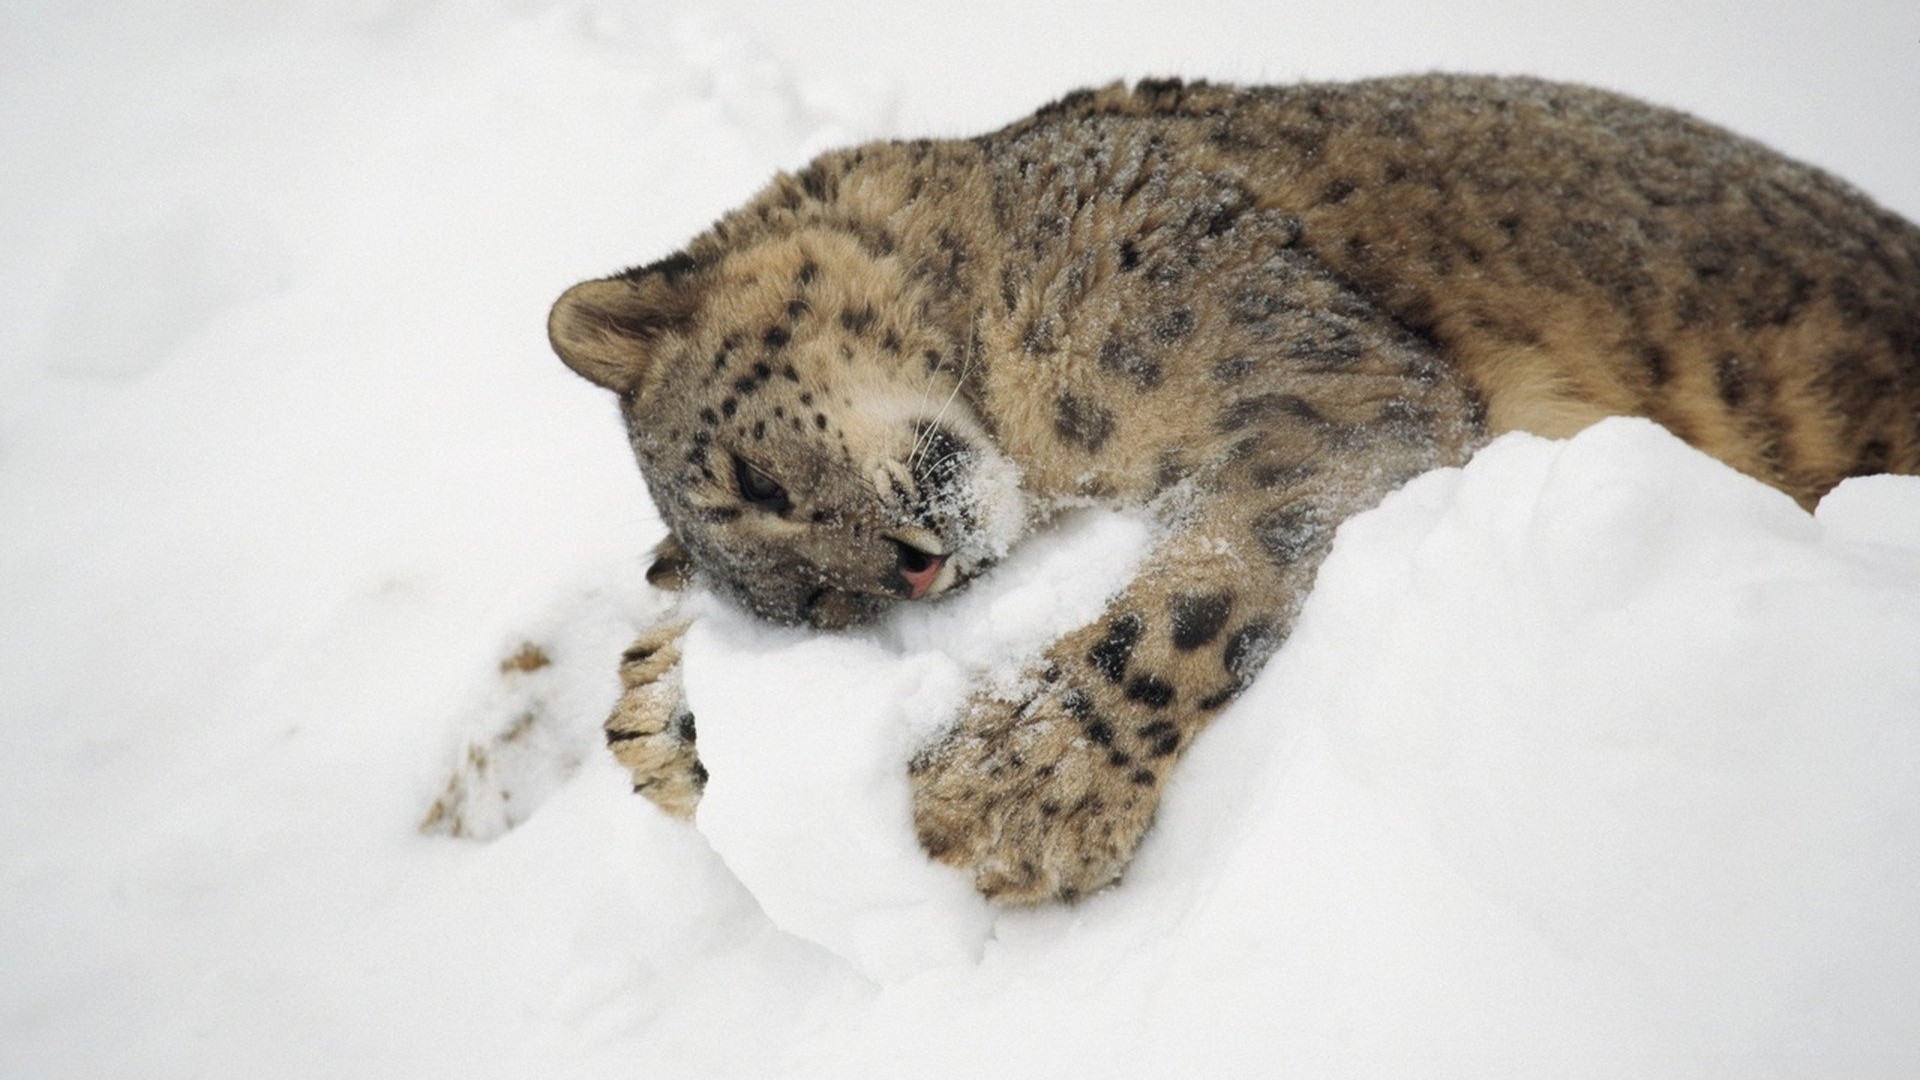 General 1920x1080 animals snow hugging snow leopards leopard big cats mammals winter outdoors